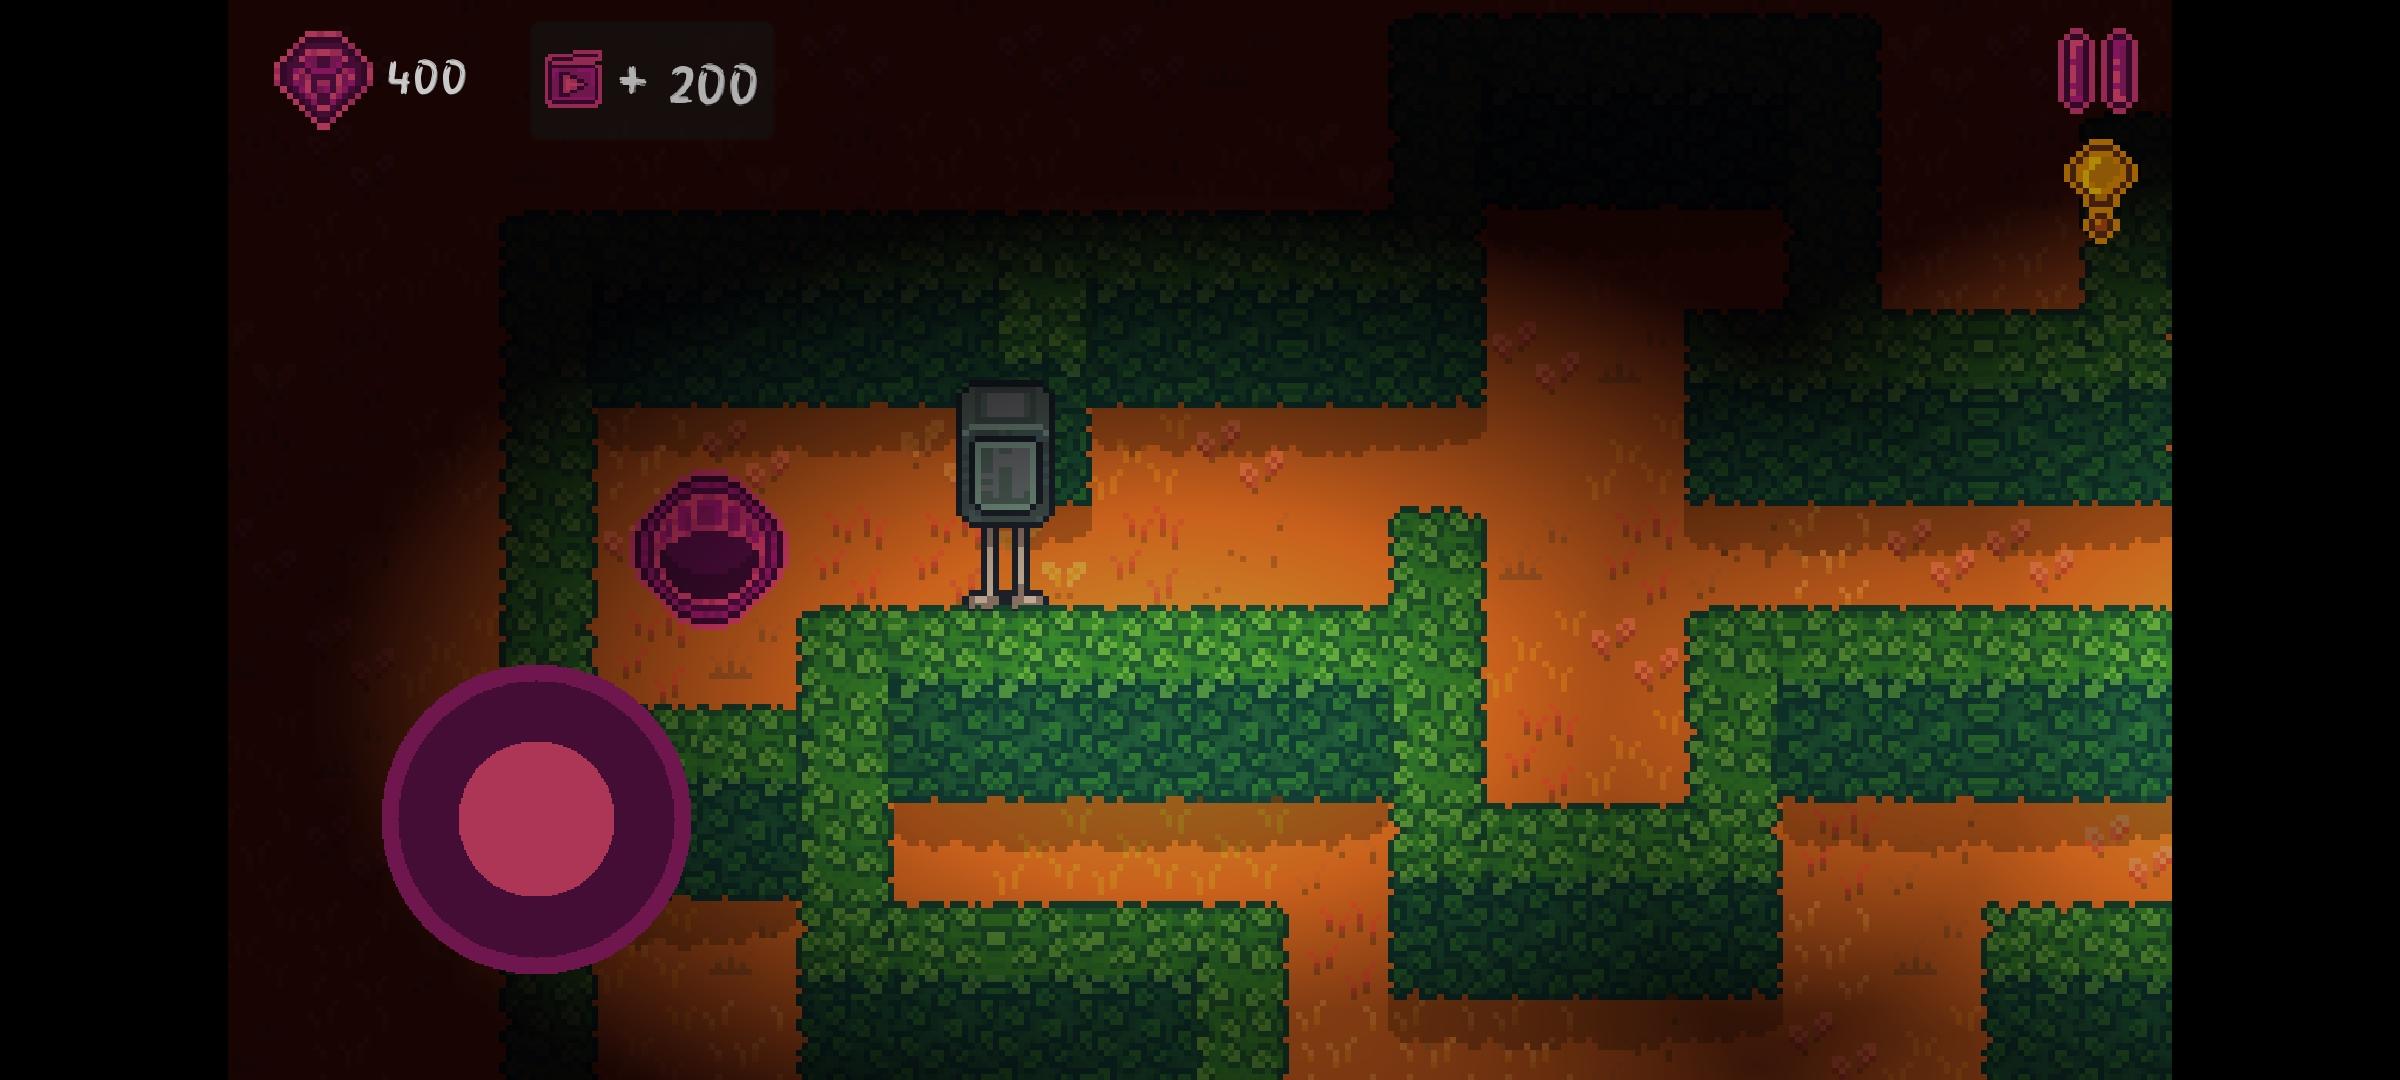 Screenshot of Tricky Maze